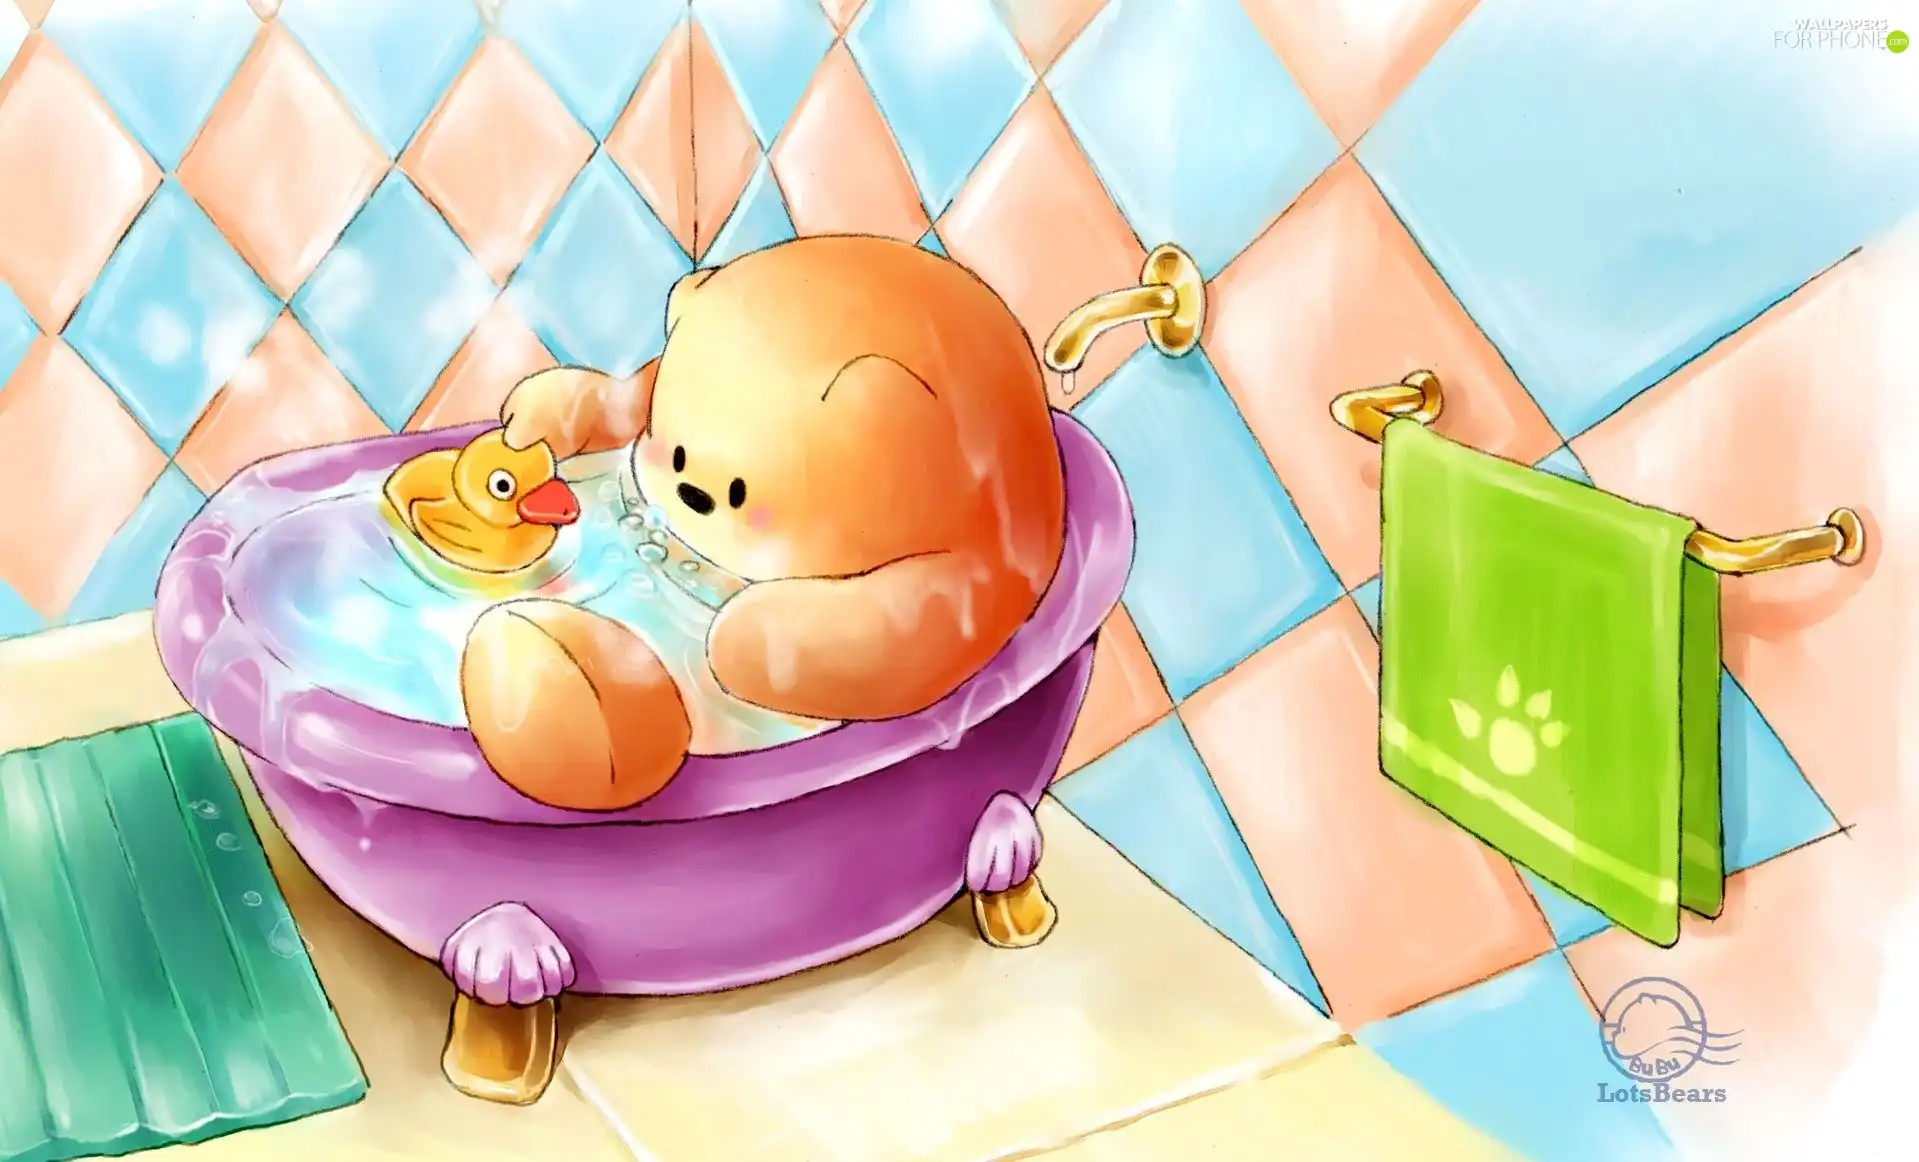 teddybear, duck, bath, rubber